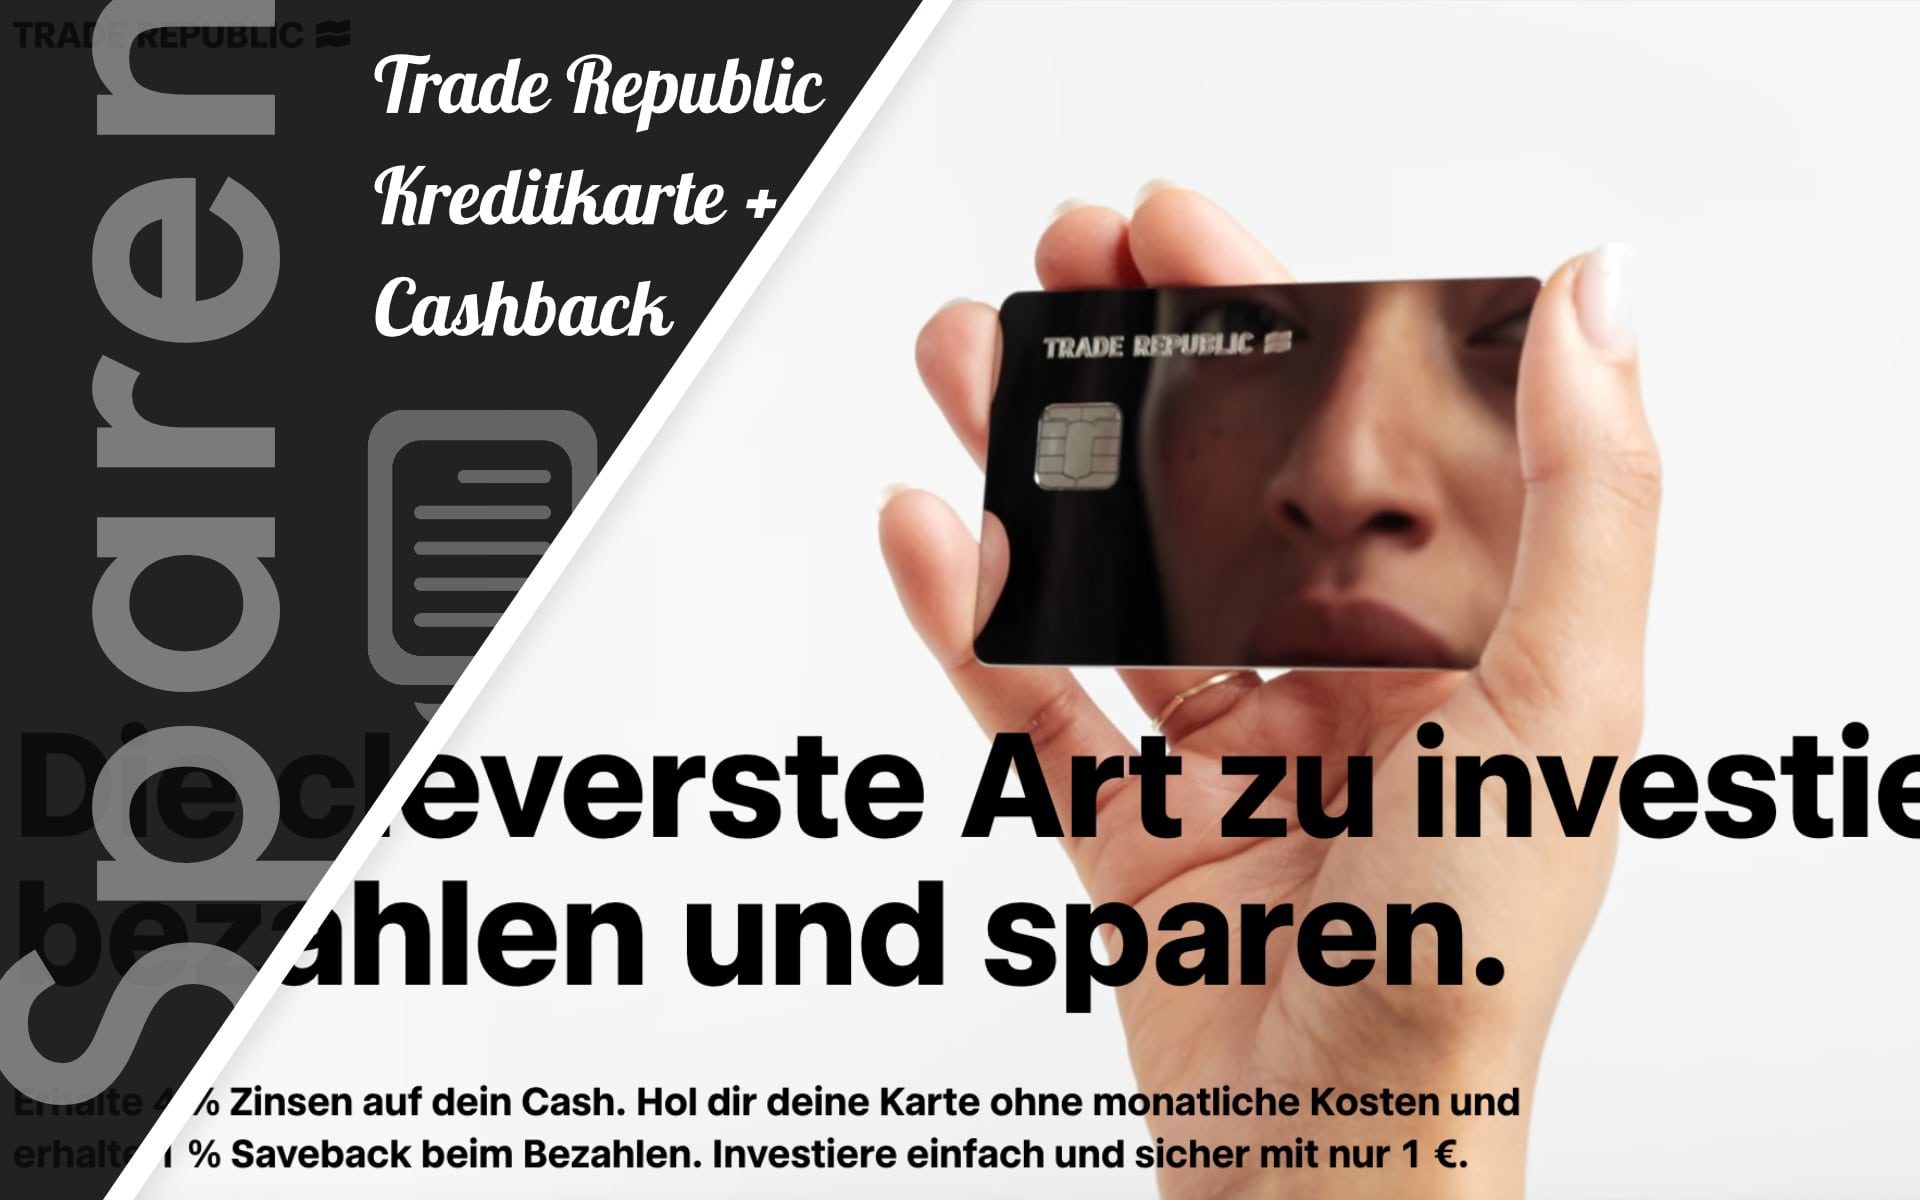 Trade Republic Karte: Cashback-Kreditkarte beantragen & alles Wichtige [Guide]